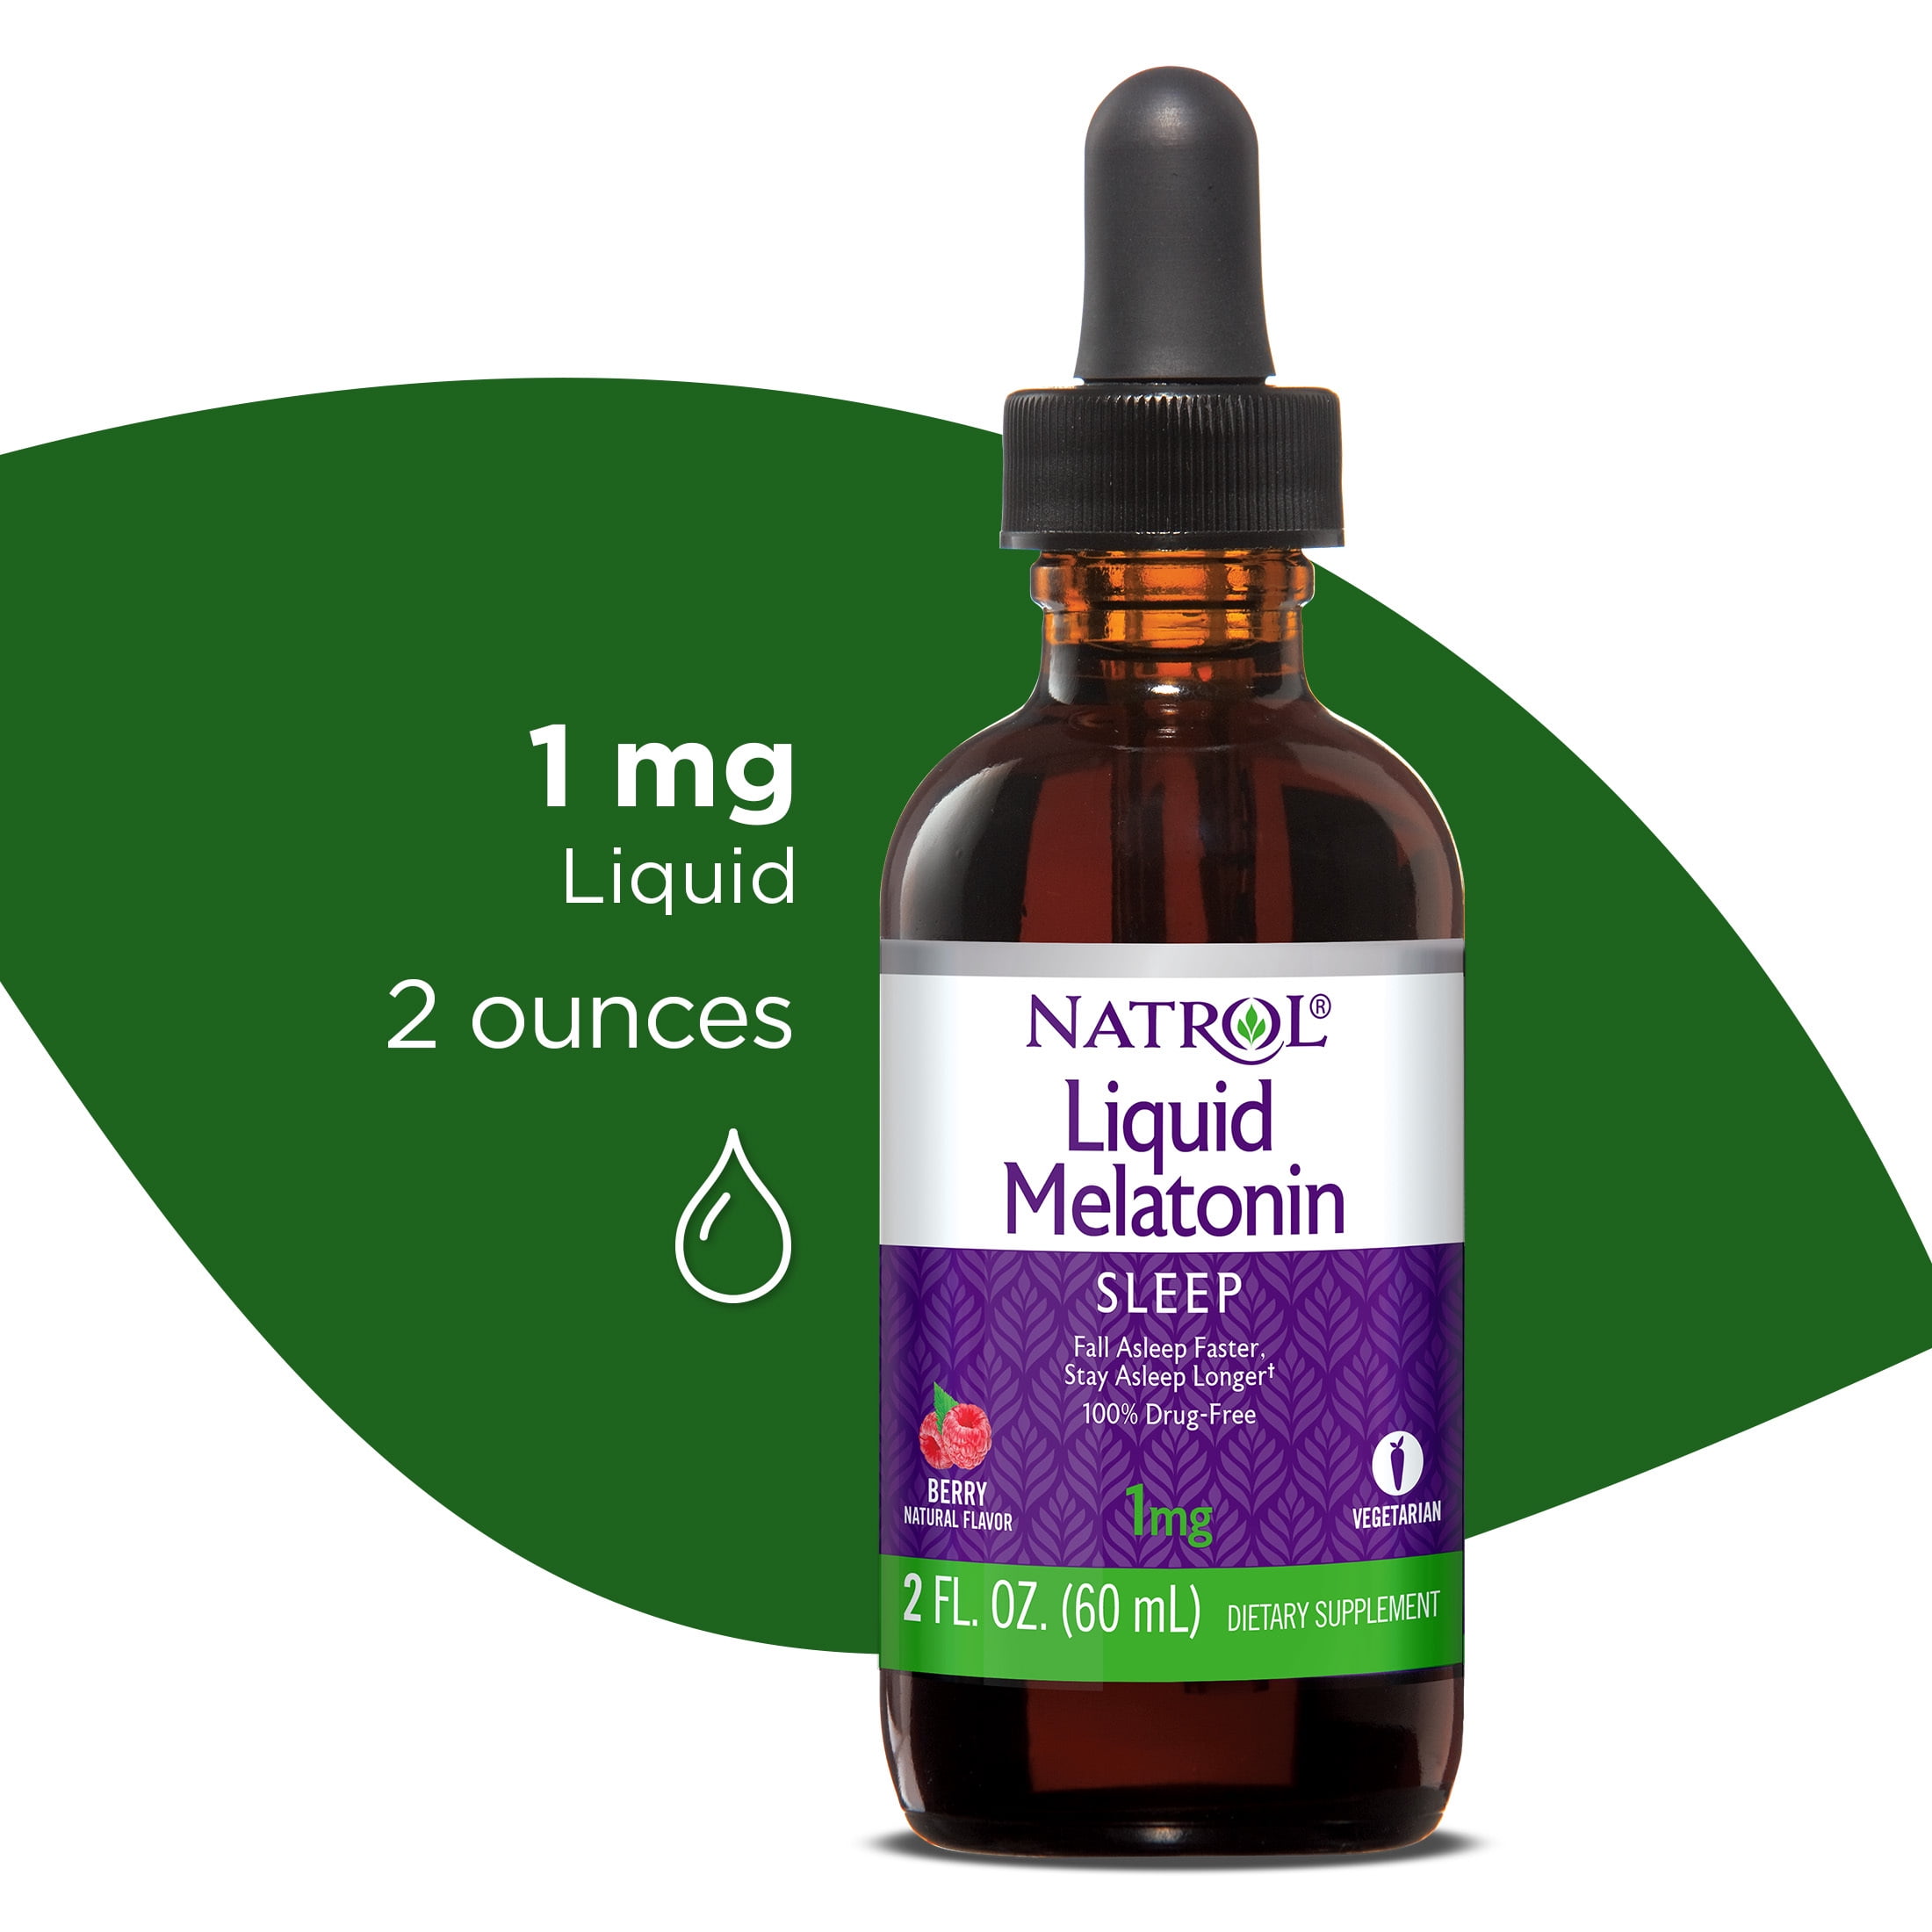 Natrol Liquid Melatonin, Sleep Supplement, Berry, 2 Fl. Ounce Tincture Bottle, 1mg